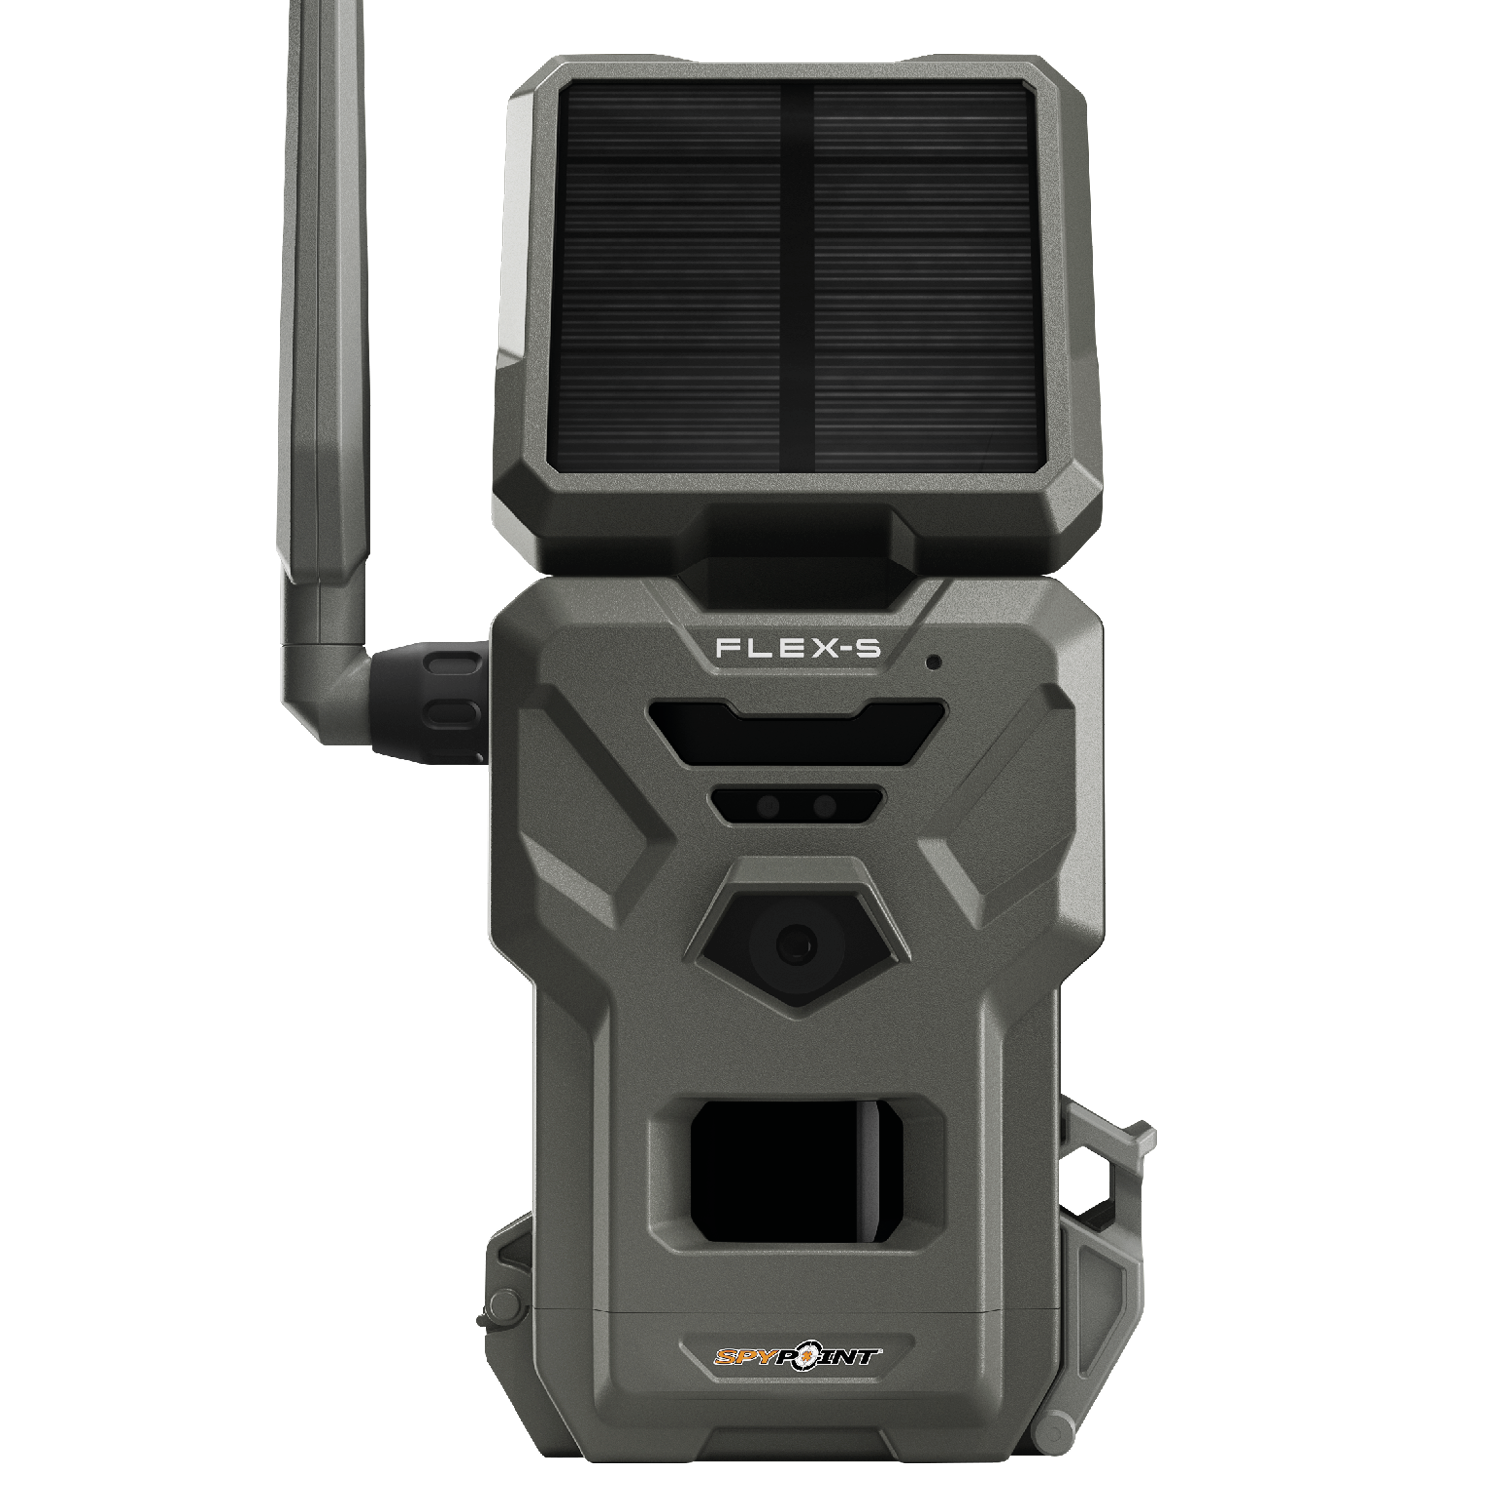 Spypoint FLEX-S Solar 4G LTE Cellular Trail Camera